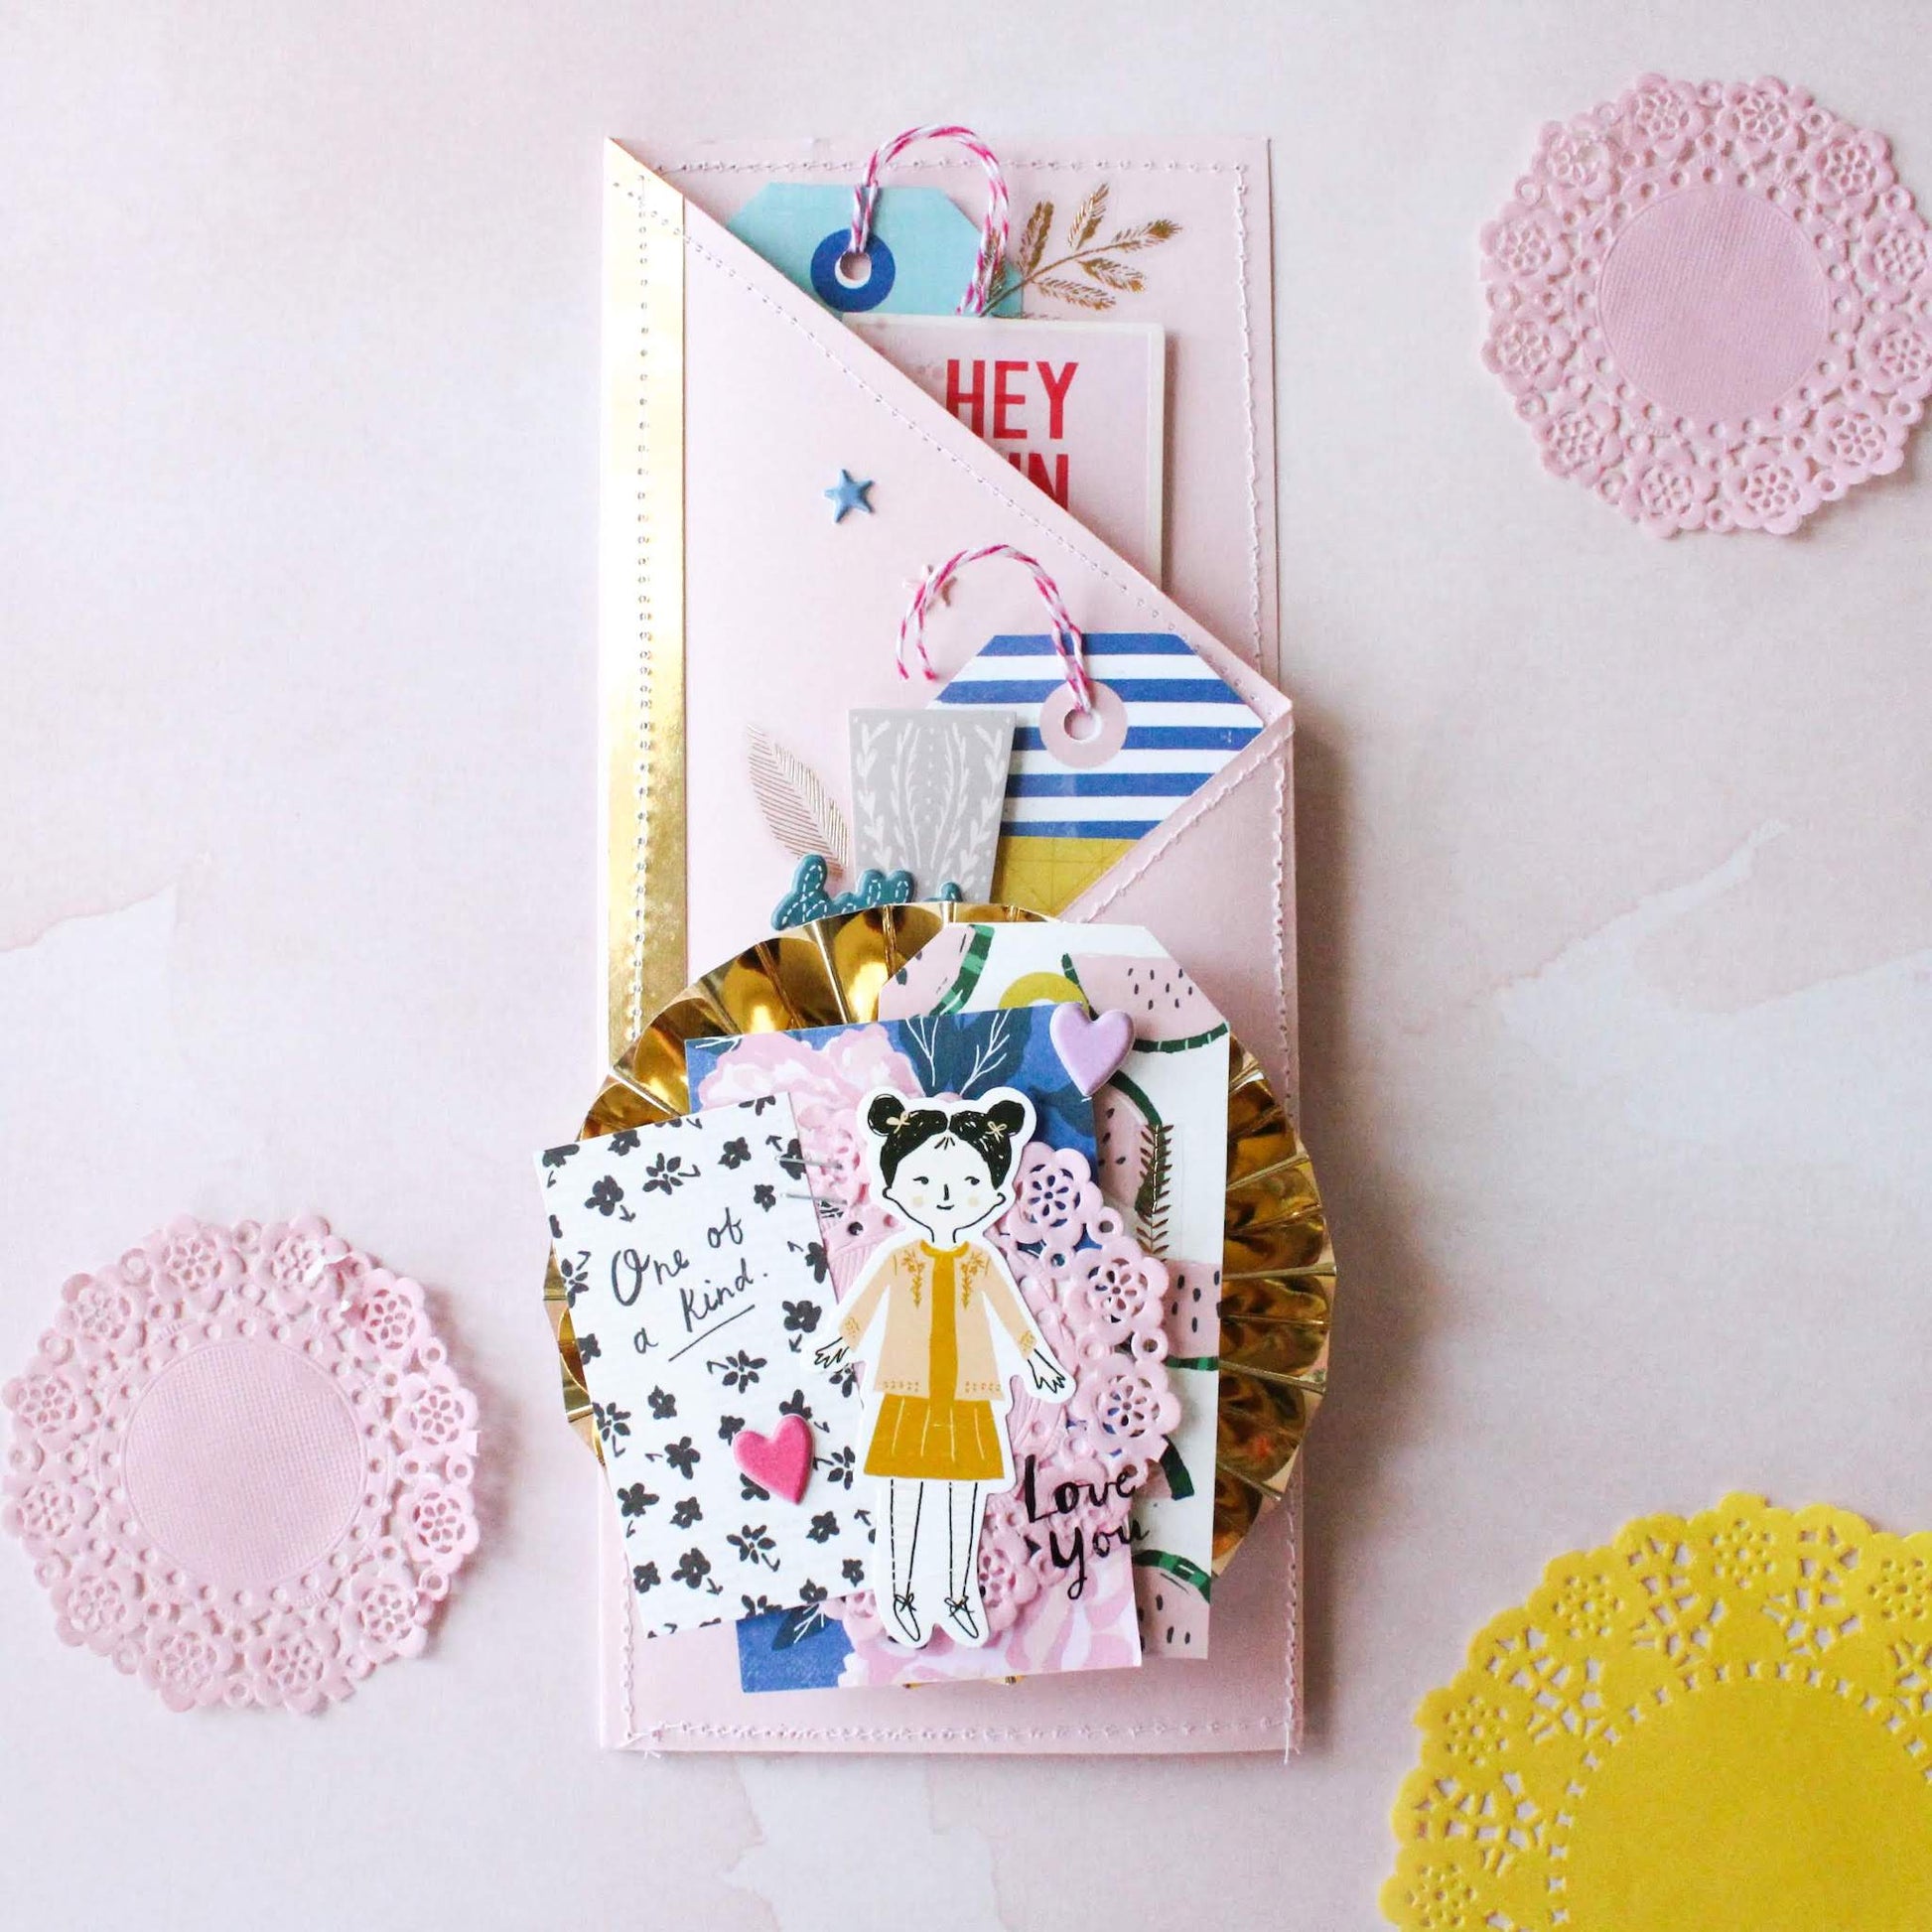 Pink Lemonade Pop-Tone | Solid-Core Cardstock Paper | Flat Shipping